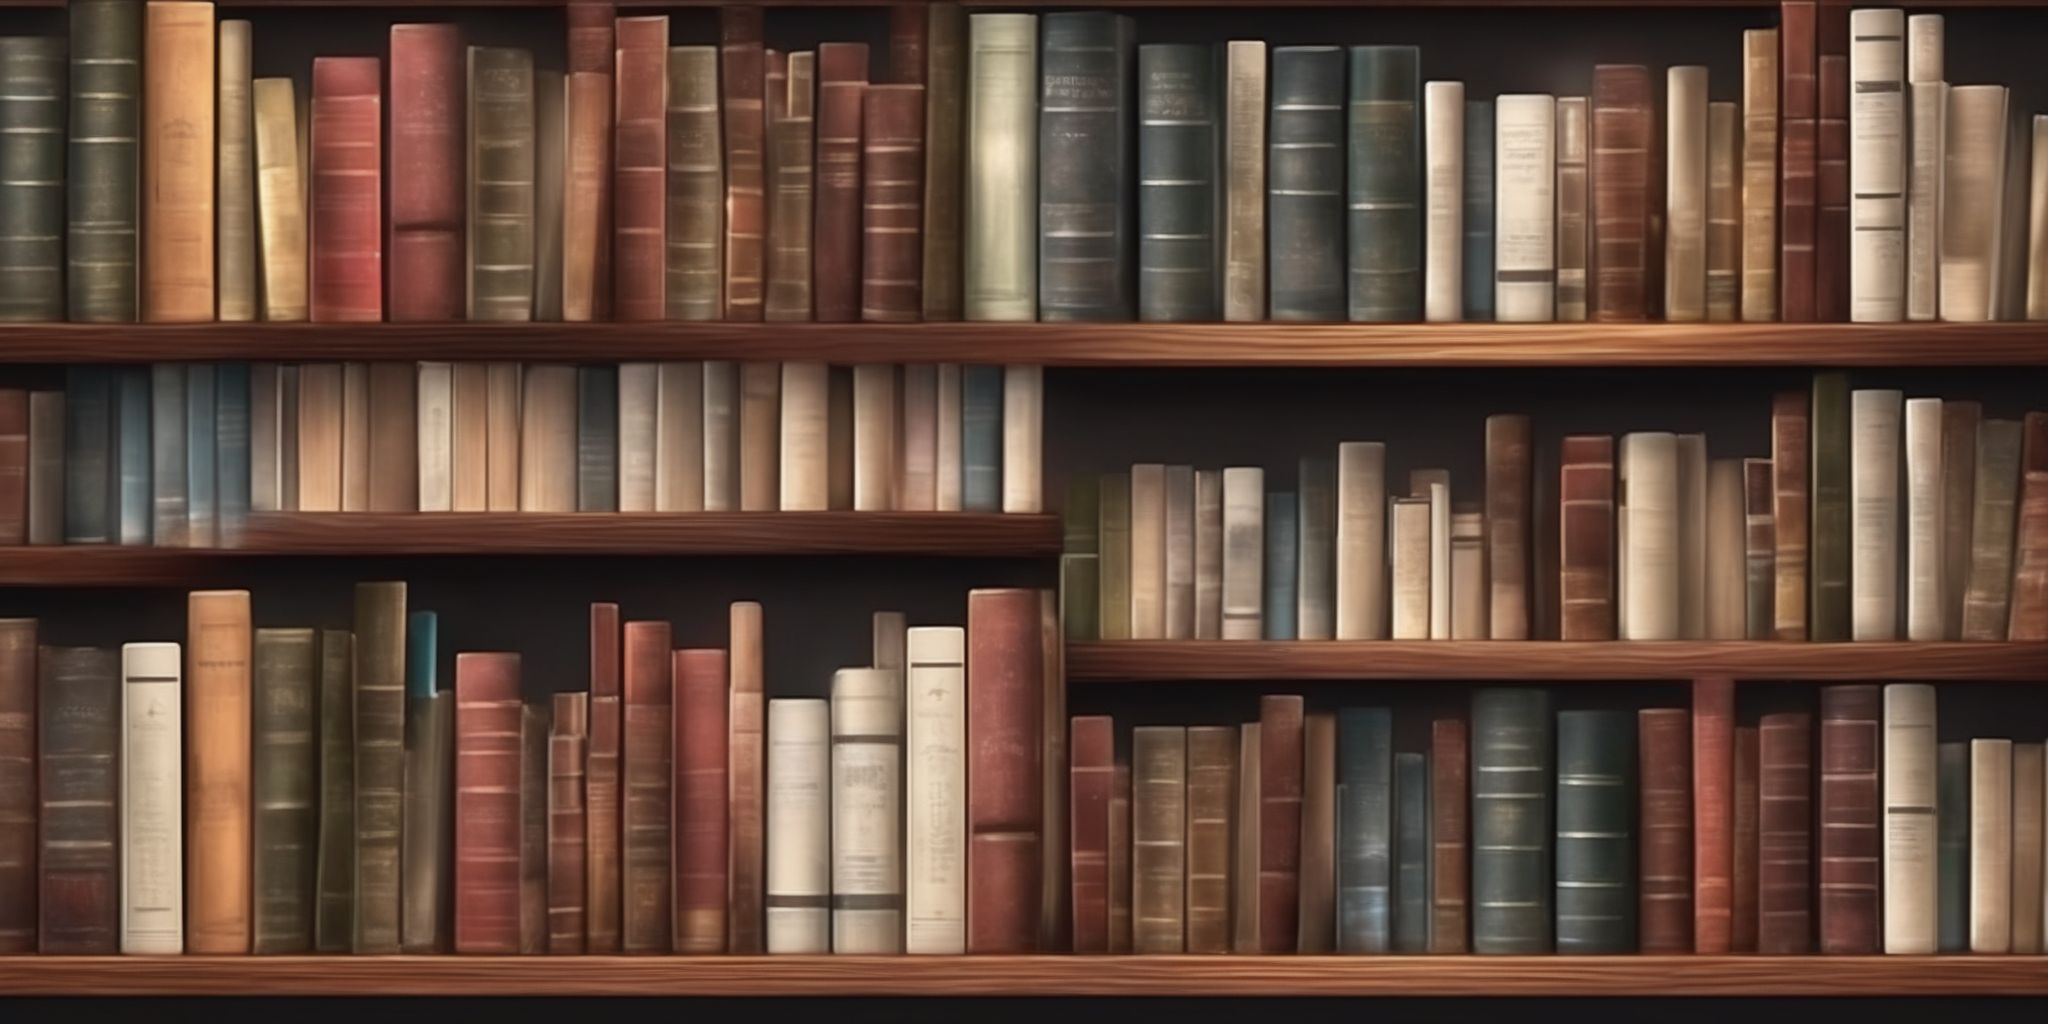 Bookshelf  in realistic, photographic style